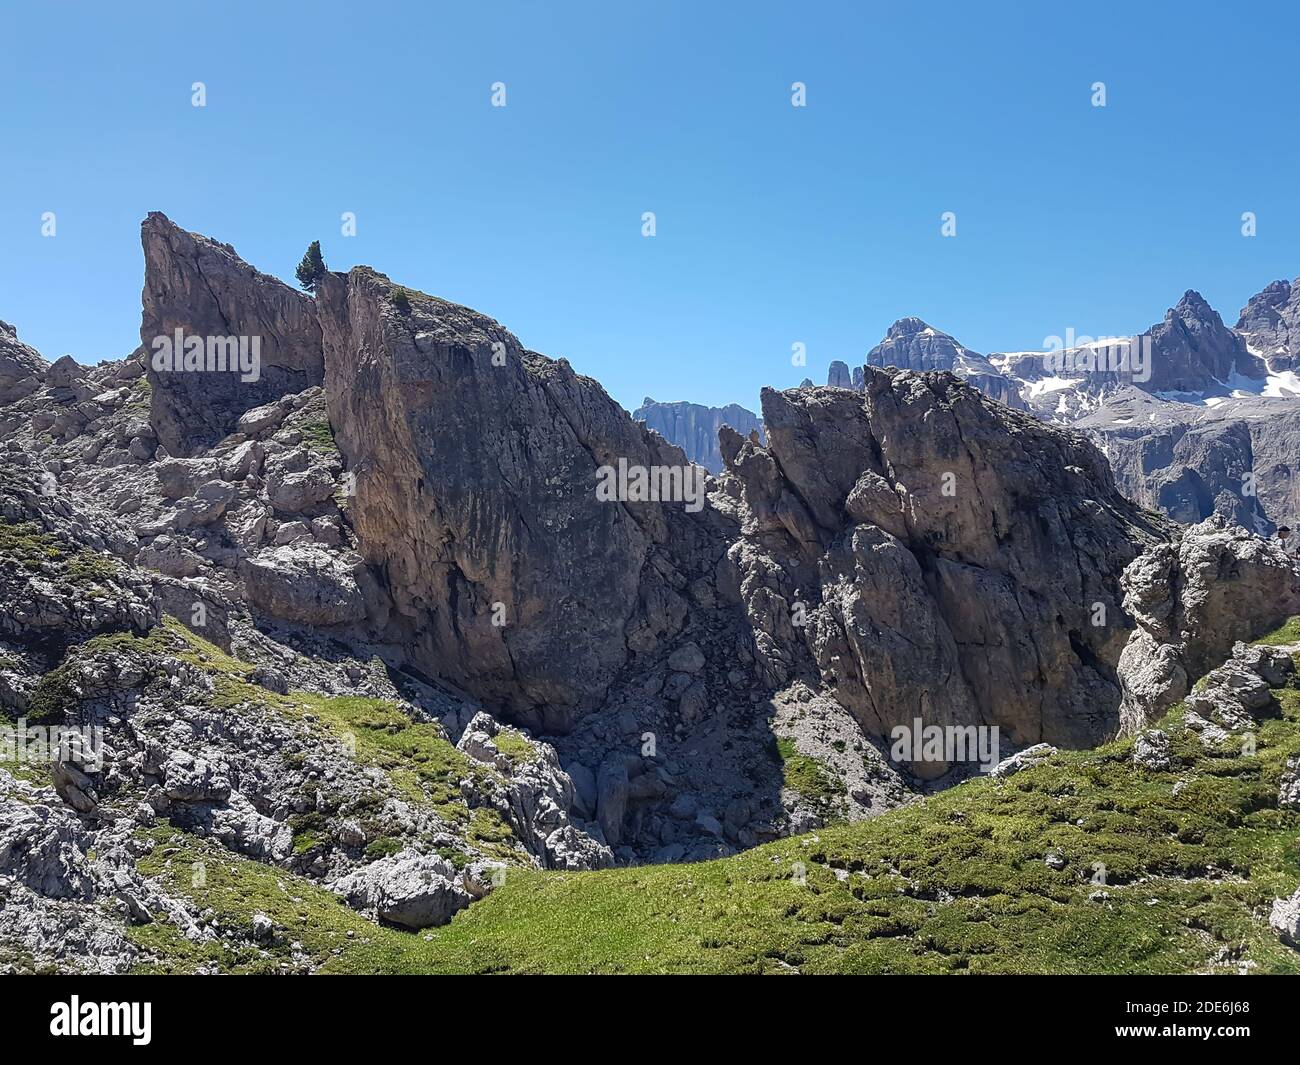 Alpi rocce montane in tirolo con cielo estivo blu Foto Stock